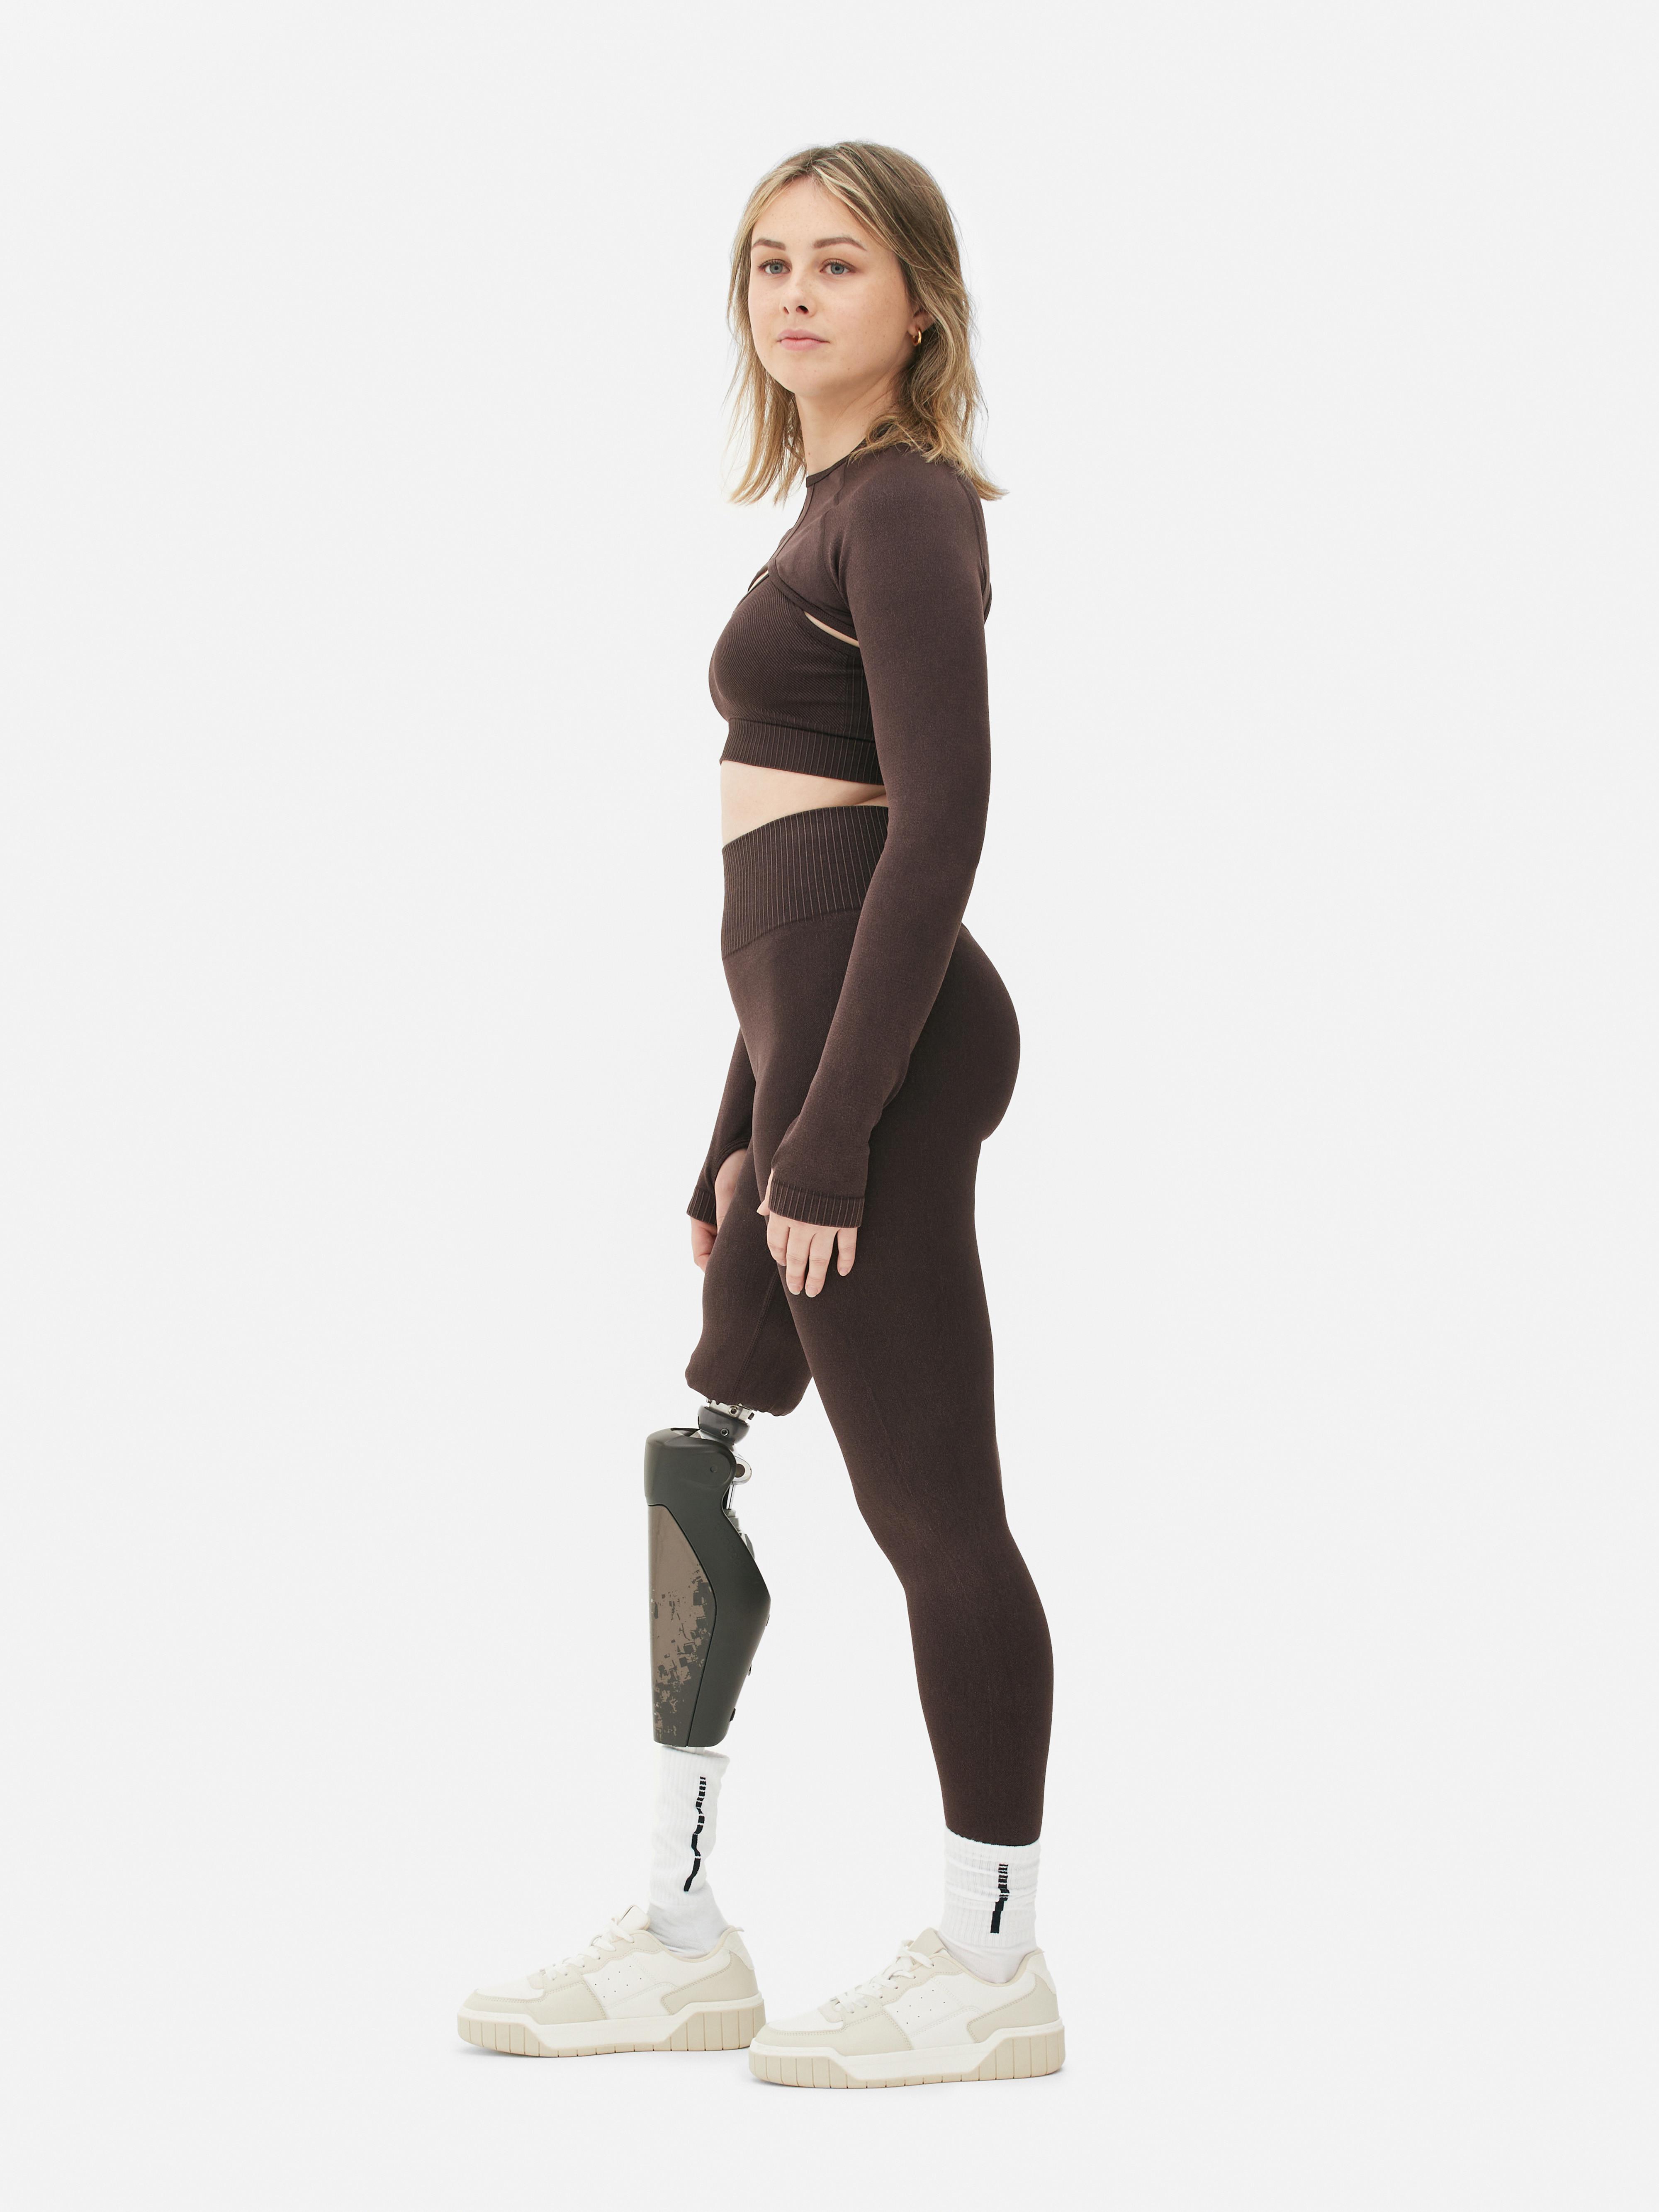 Primark Women's Leggings + Extra Warm Leggings - October 2020 